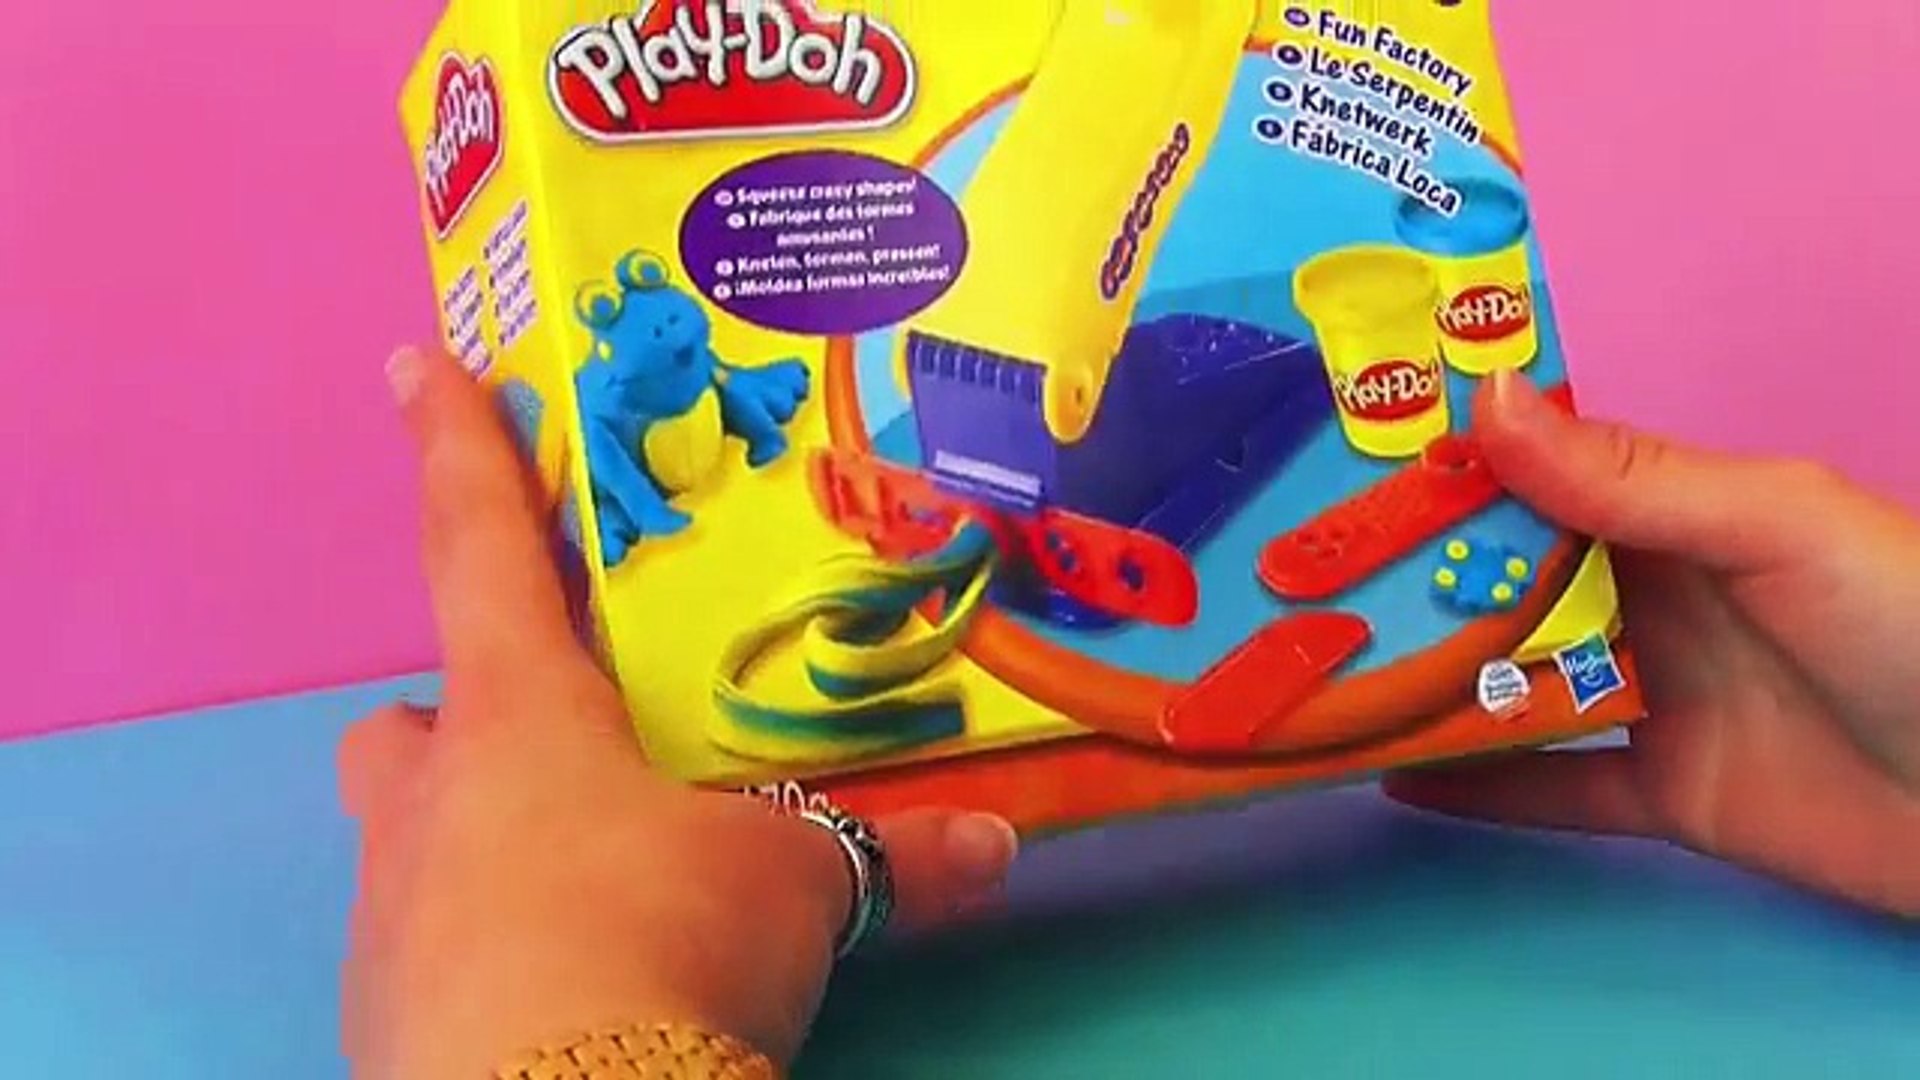 Play Doh Knete deutsch - Knetwerk Knetpresse Fun Factory Hasbro [Unboxing]  - video dailymotion